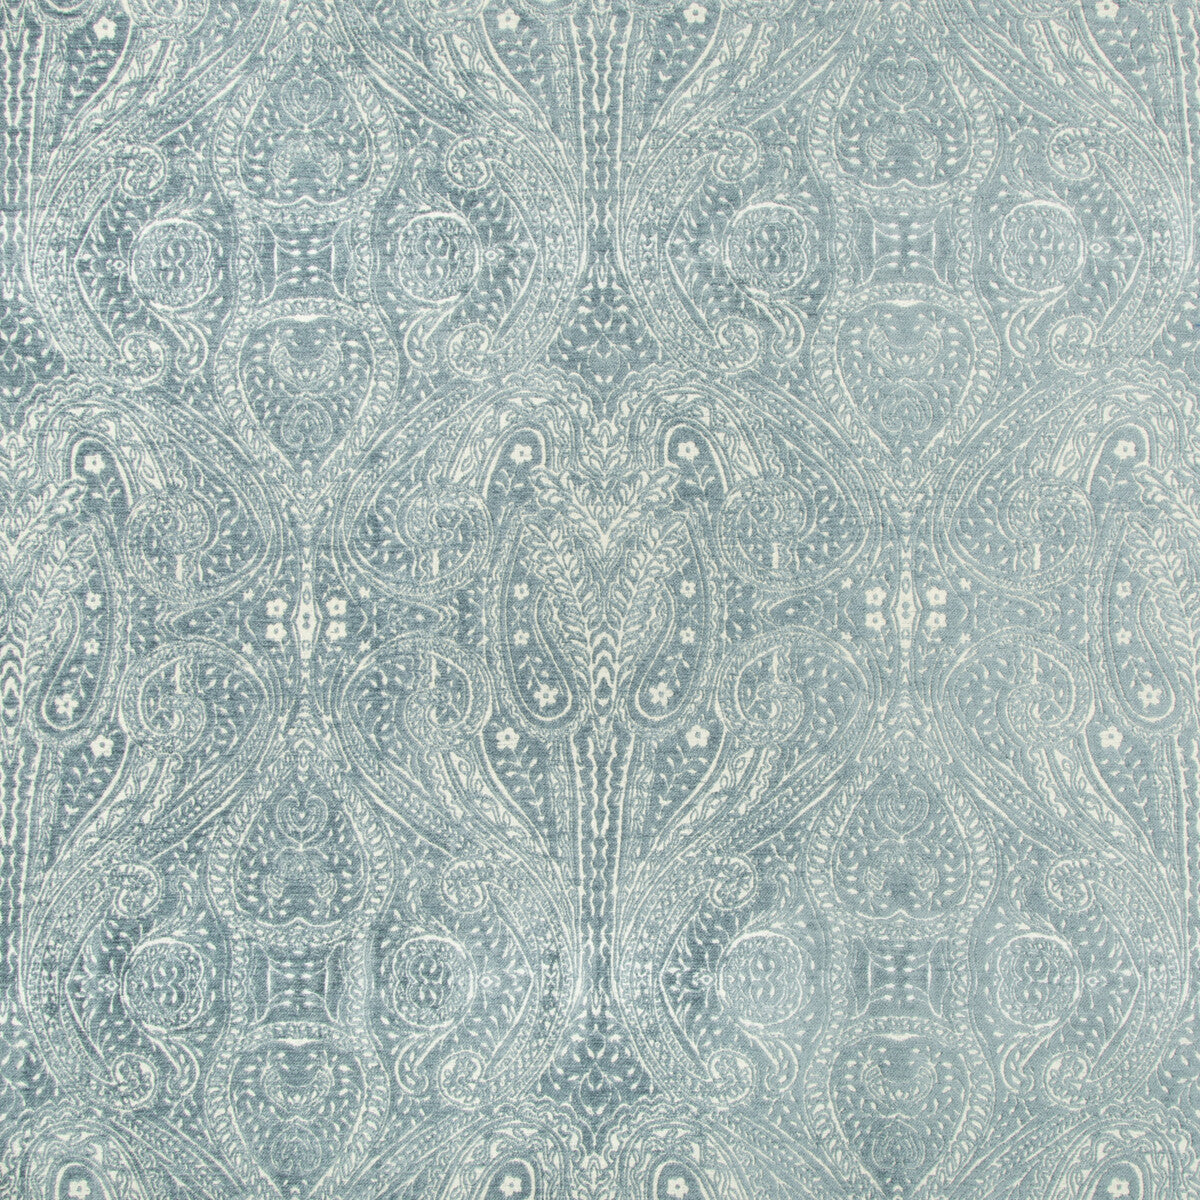 Kravet Design fabric in 34720-15 color - pattern 34720.15.0 - by Kravet Design in the Gis collection